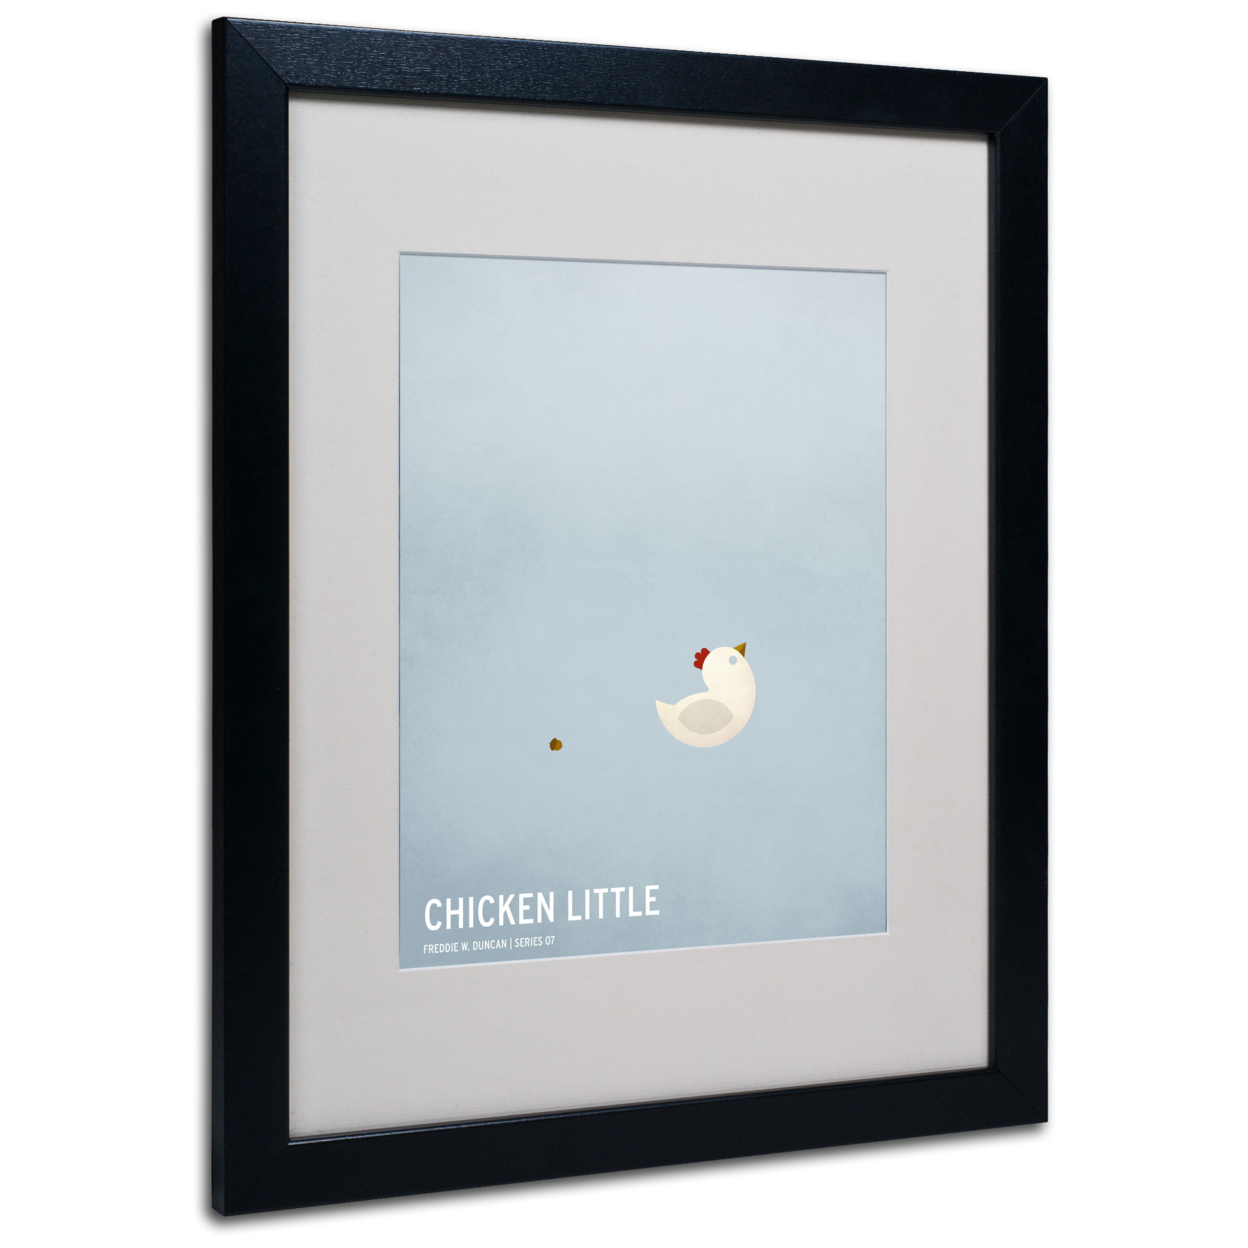 Christian Jackson 'Chicken Little' Black Wooden Framed Art 18 X 22 Inches